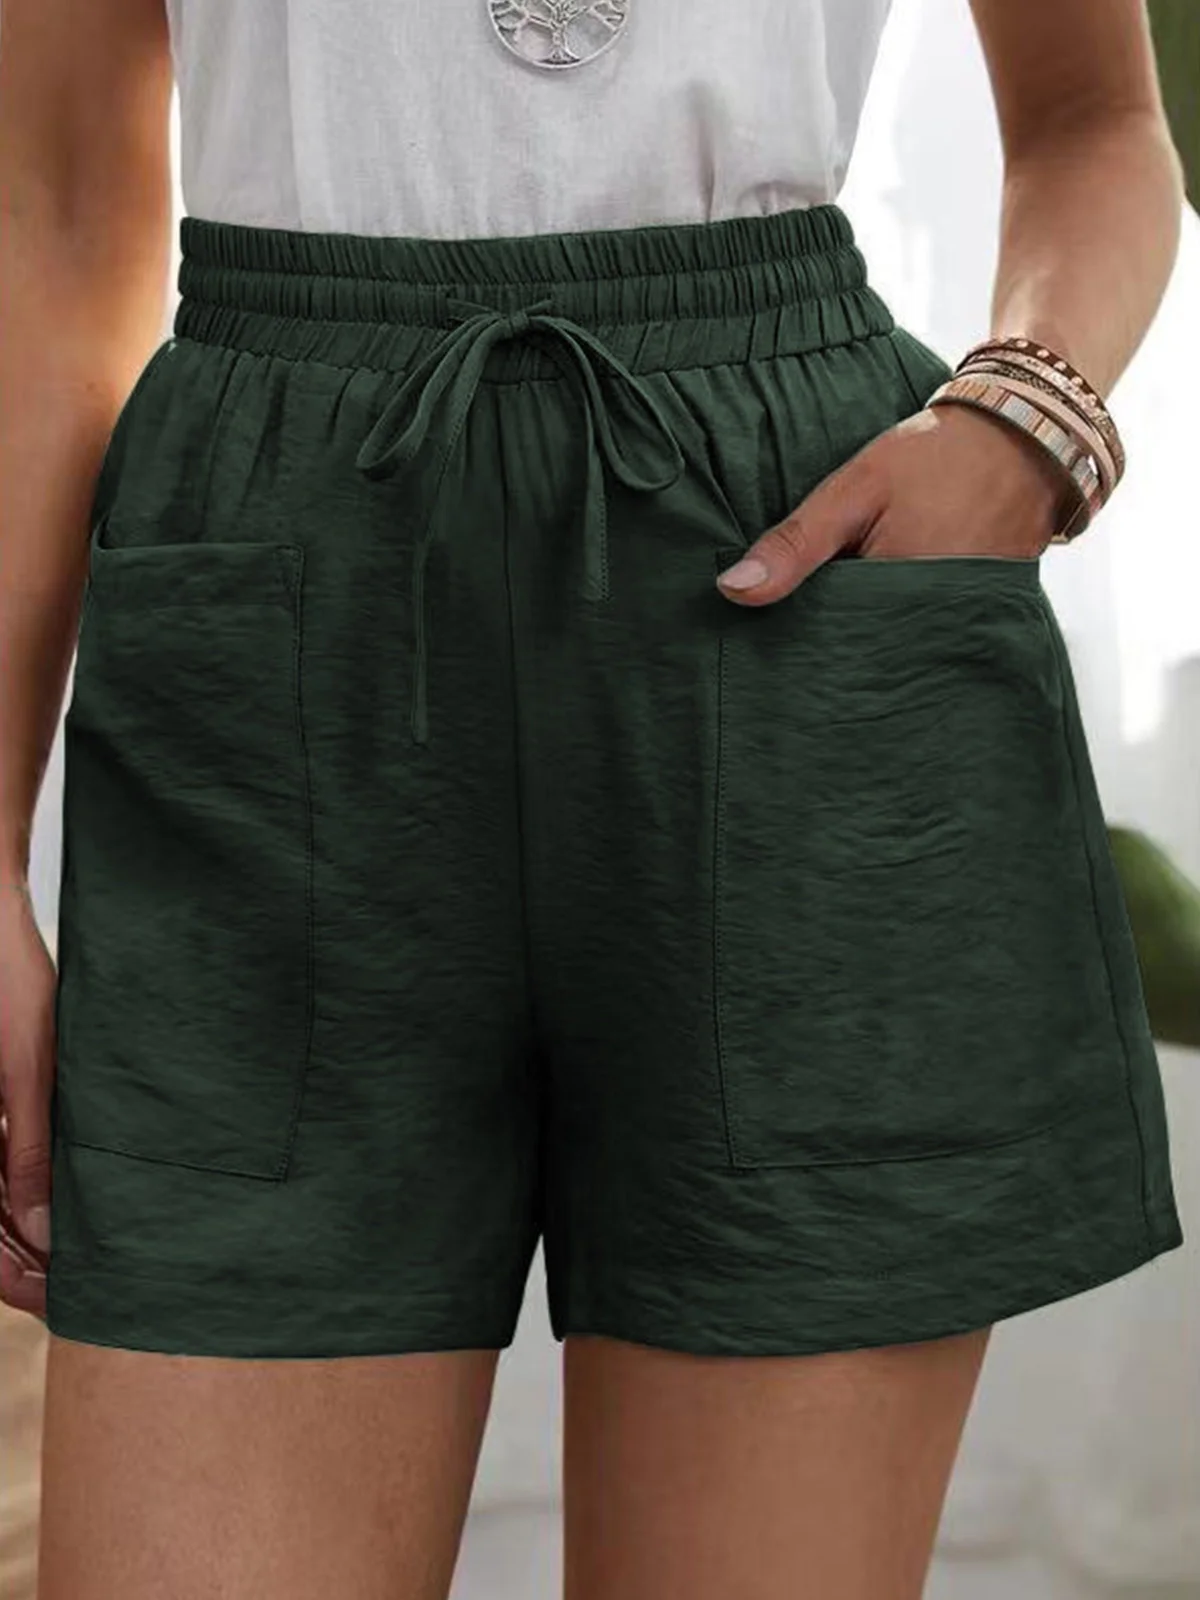 Casual Plain Shorts Pant